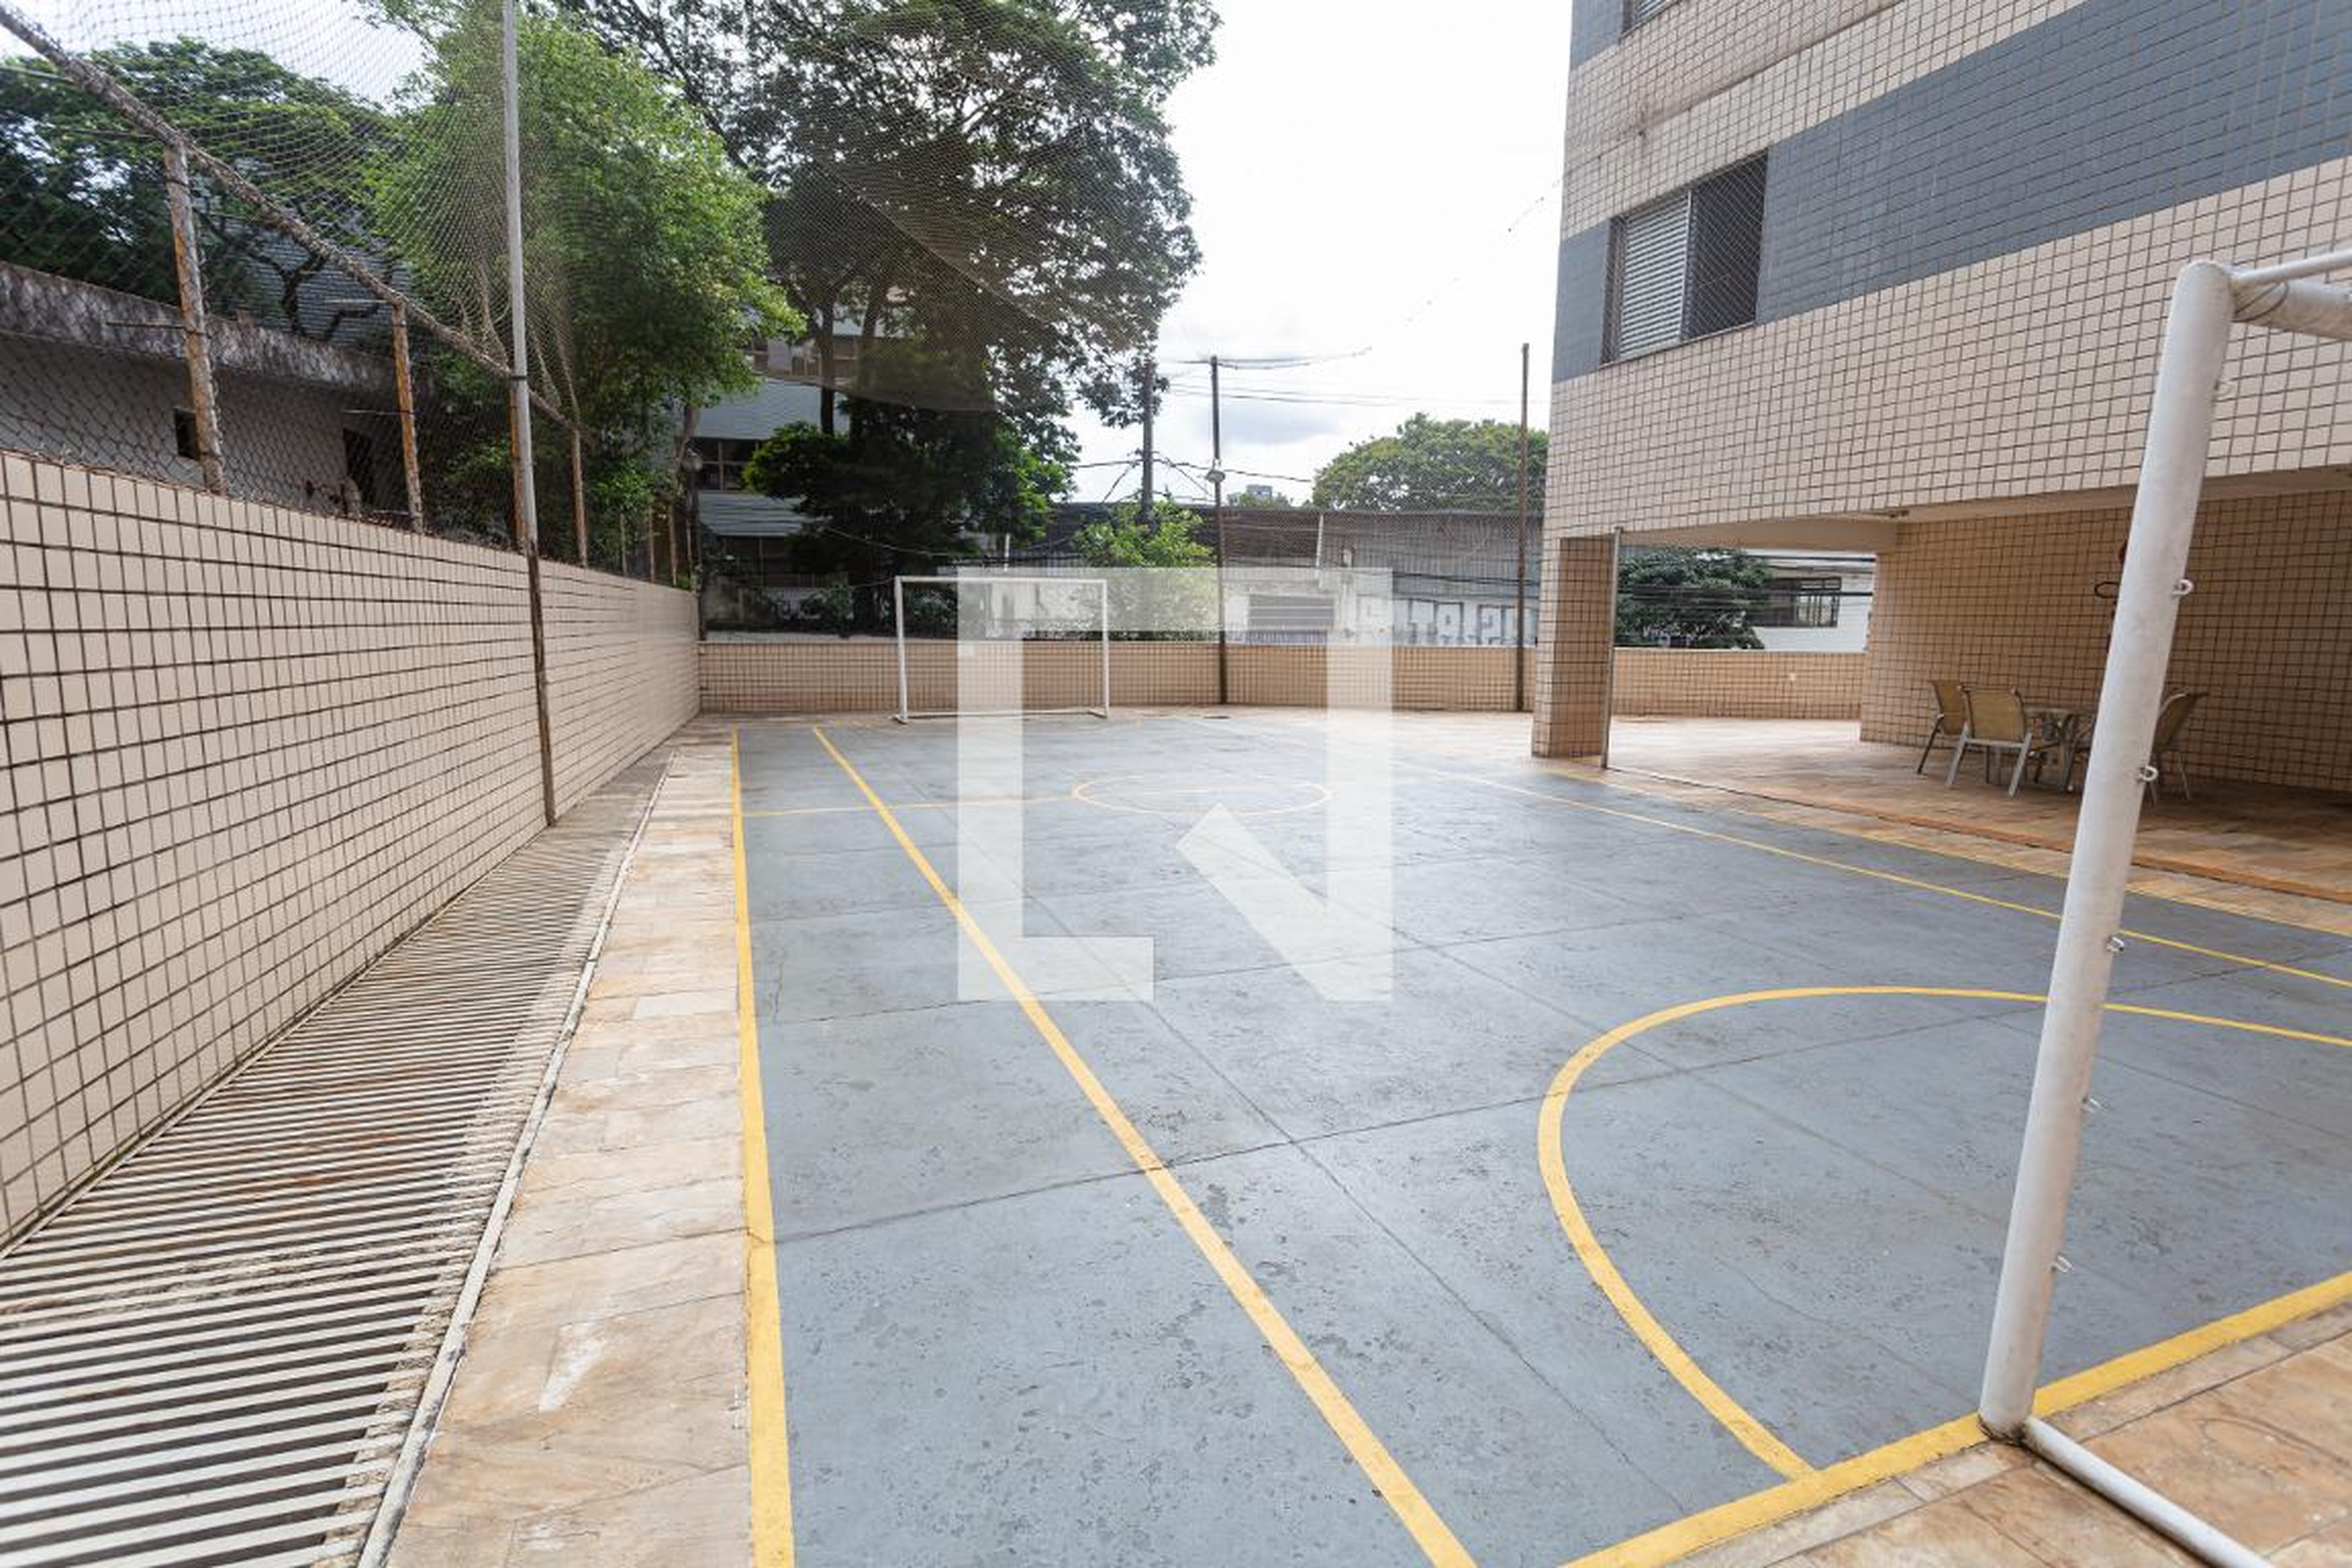 Quadra Esportiva - Edifício Portal da Savassi